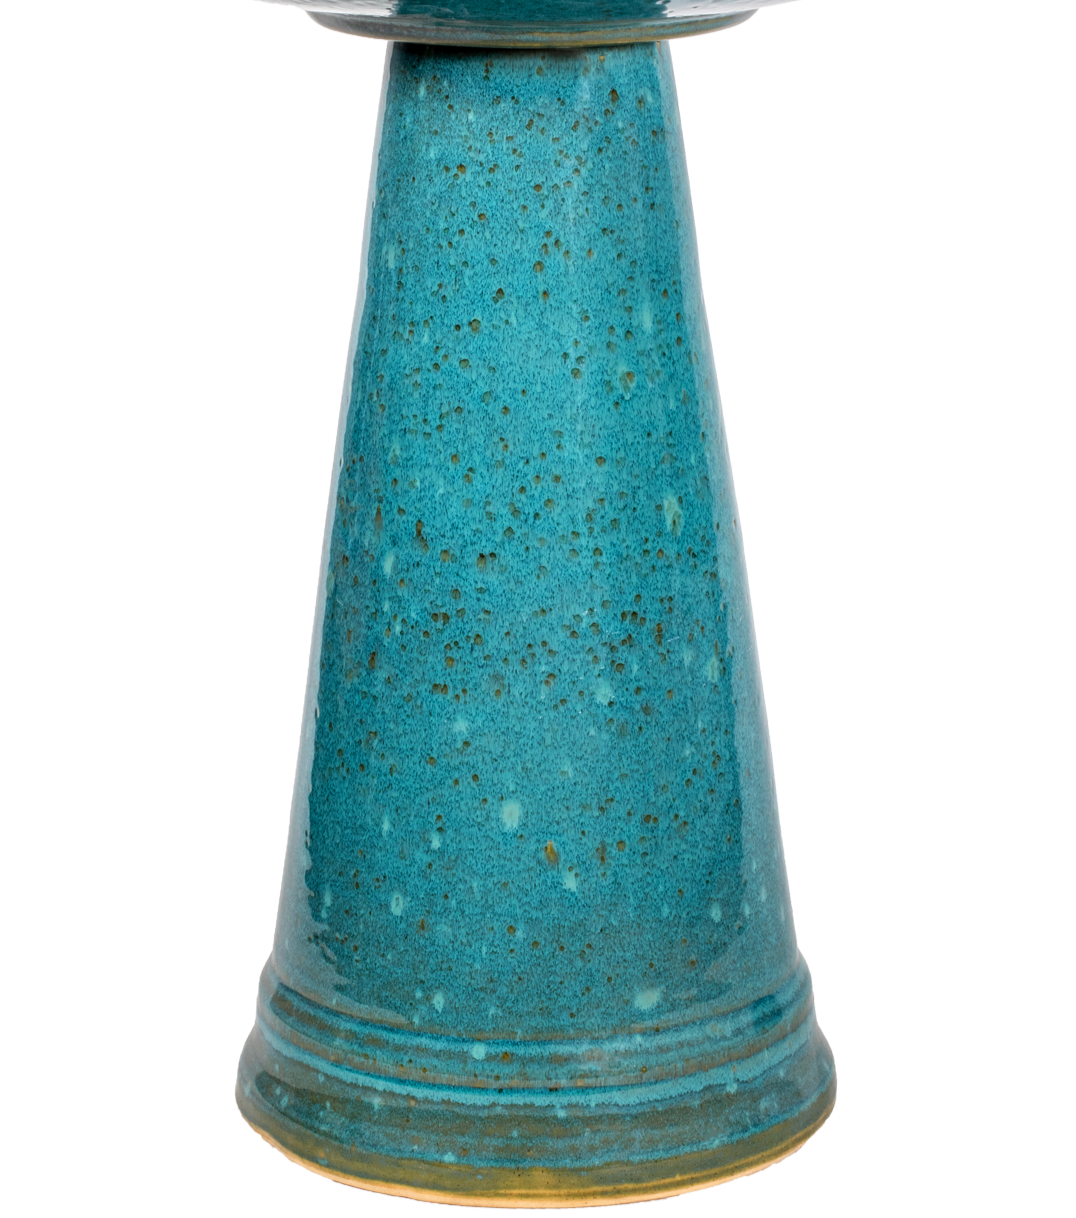 ceramic turquoise birdbath pedestal with a simple clean modern design